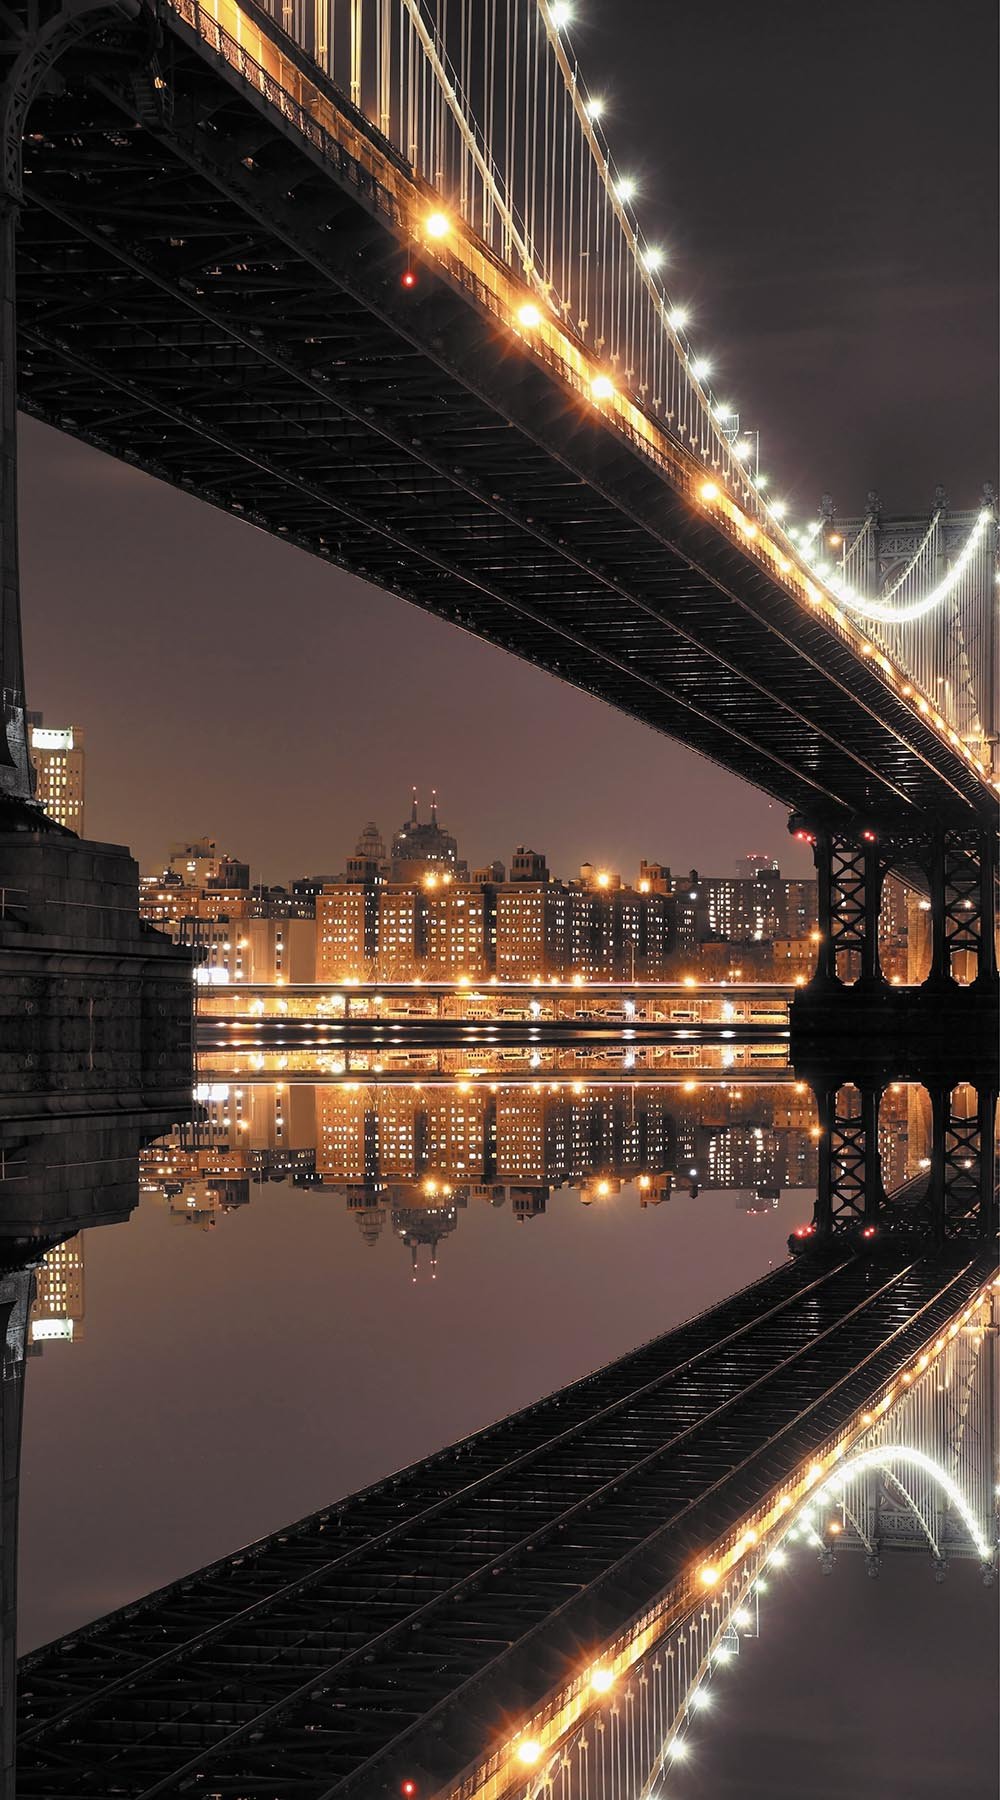 Фотообои Бруклинский мост черно белый